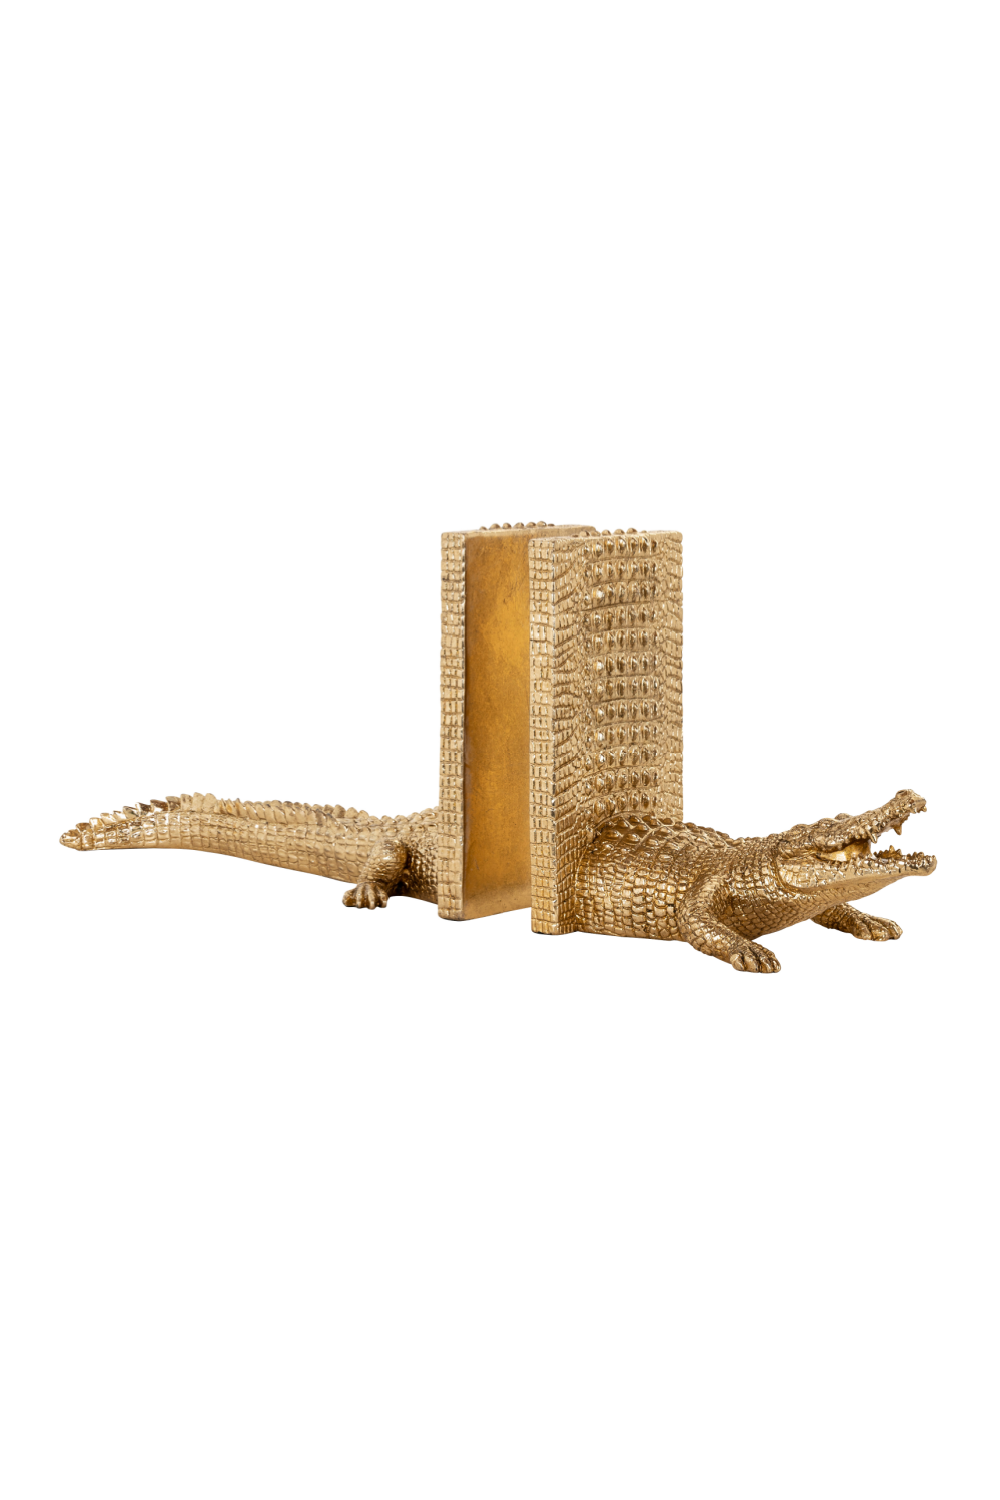 Gold Reptilian Book Ends | OROA Crocodile | OROA.com